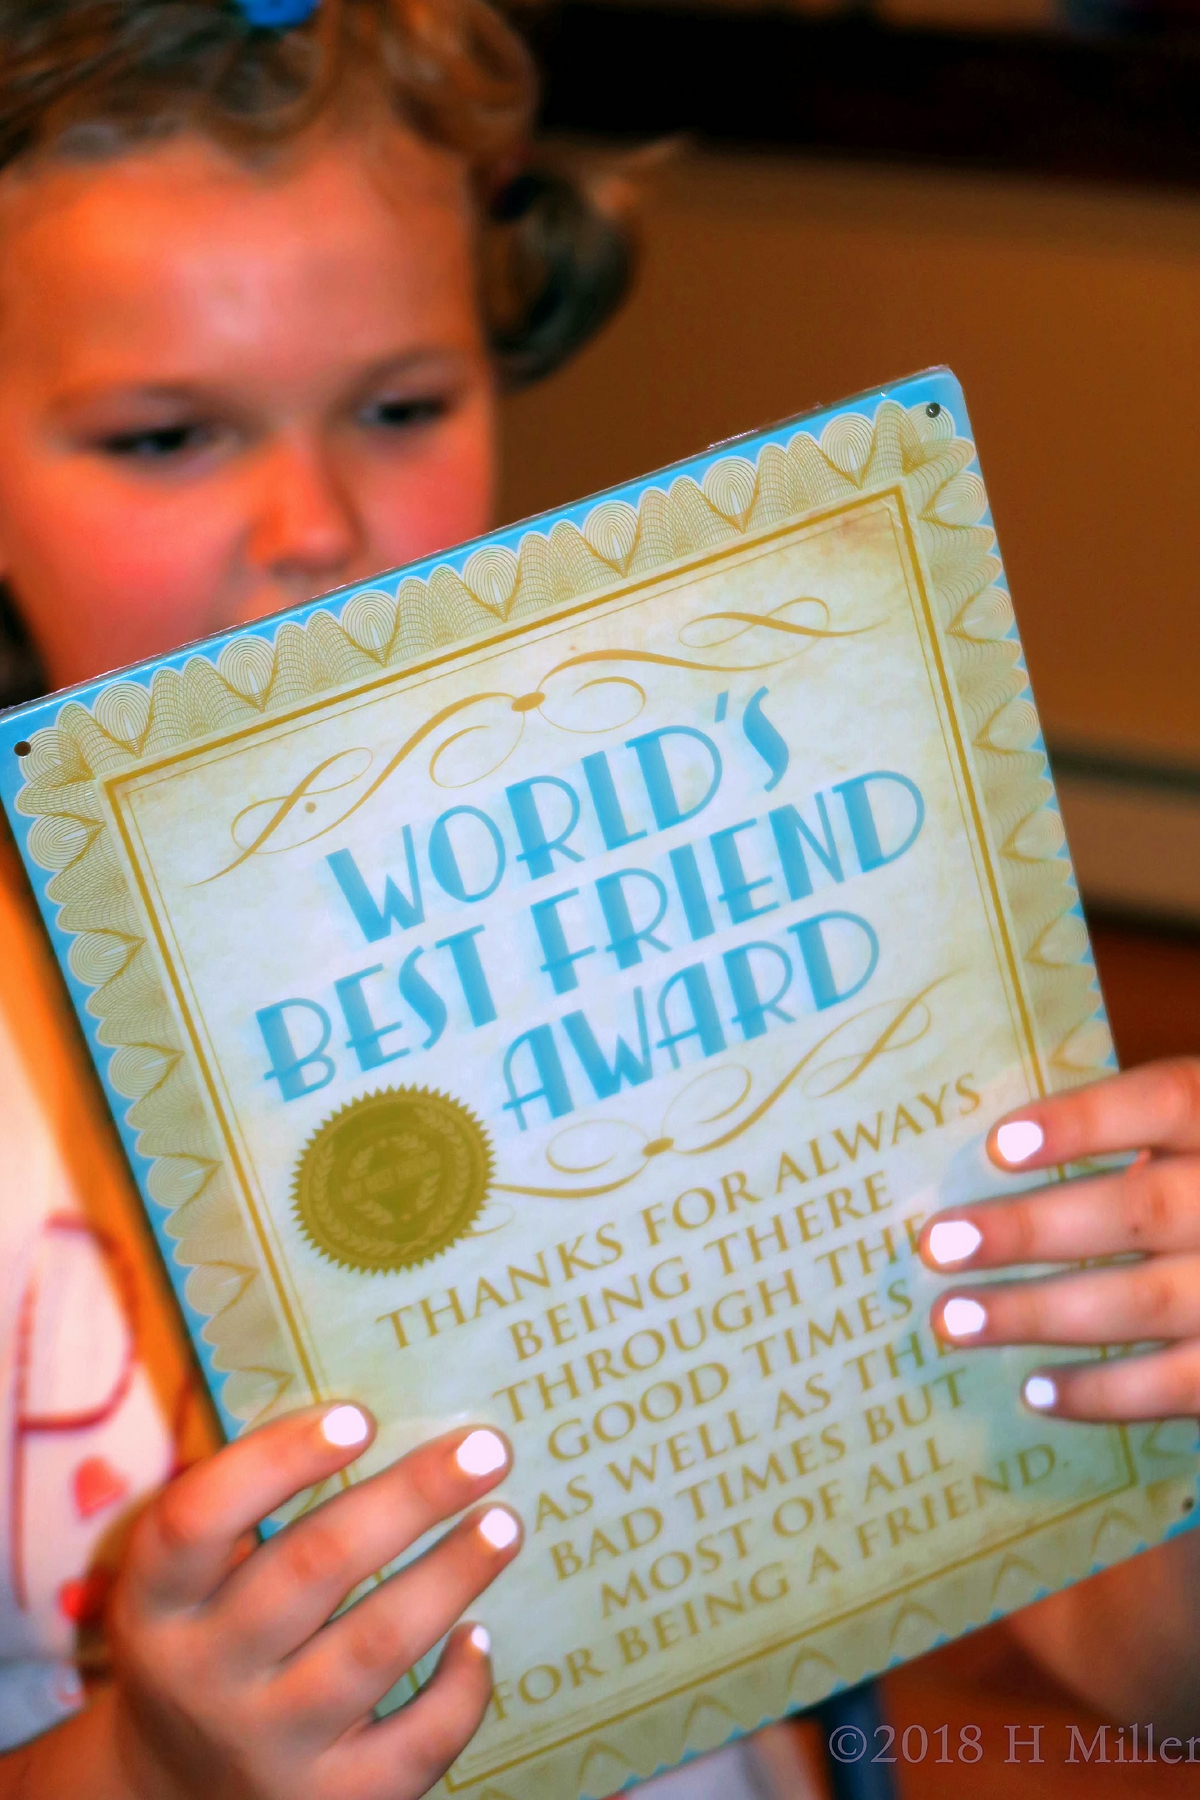 World's Best Friend Award!!! 